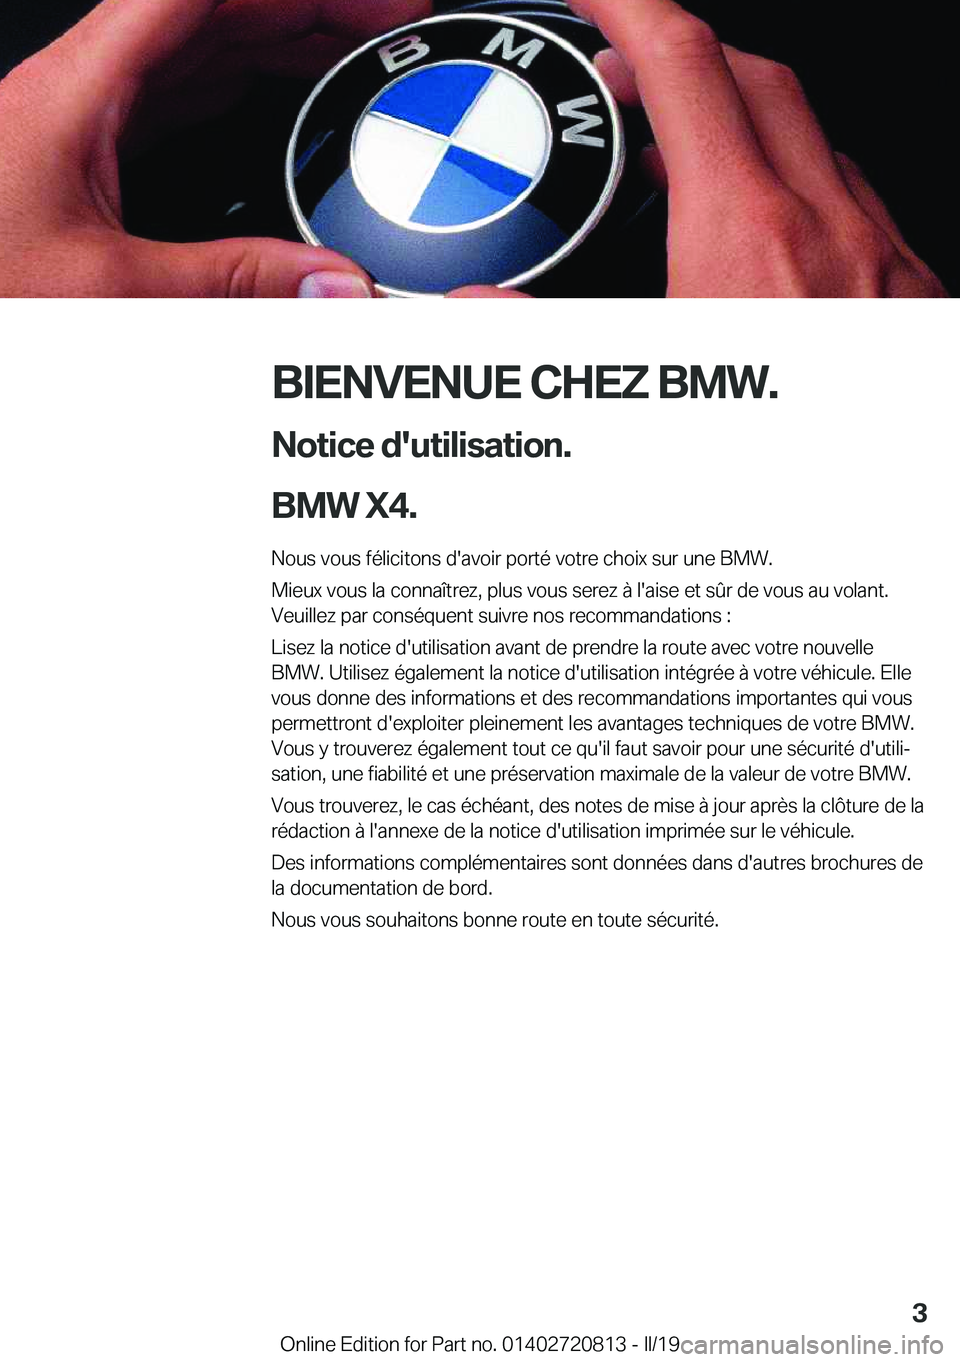 BMW X4 2019  Notices Demploi (in French) �B�I�E�N�V�E�N�U�E��C�H�E�Z��B�M�W�.�N�o�t�i�c�e��d�'�u�t�i�l�i�s�a�t�i�o�n�.
�B�M�W��X�4�. �N�o�u�s��v�o�u�s��f�é�l�i�c�i�t�o�n�s��d�'�a�v�o�i�r��p�o�r�t�é��v�o�t�r�e��c�h�o�i�x�